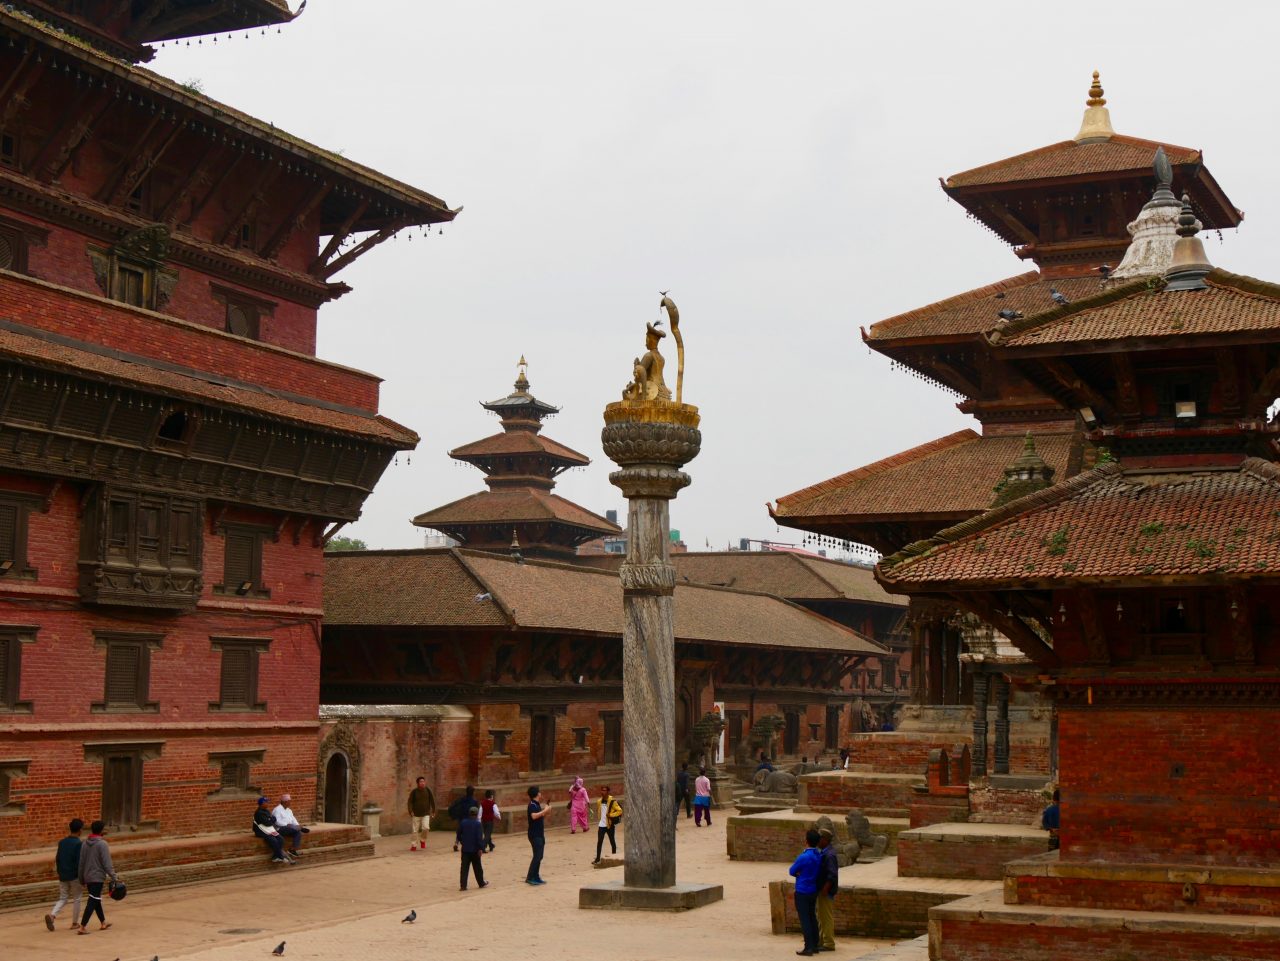 Lalitpur, Nepal